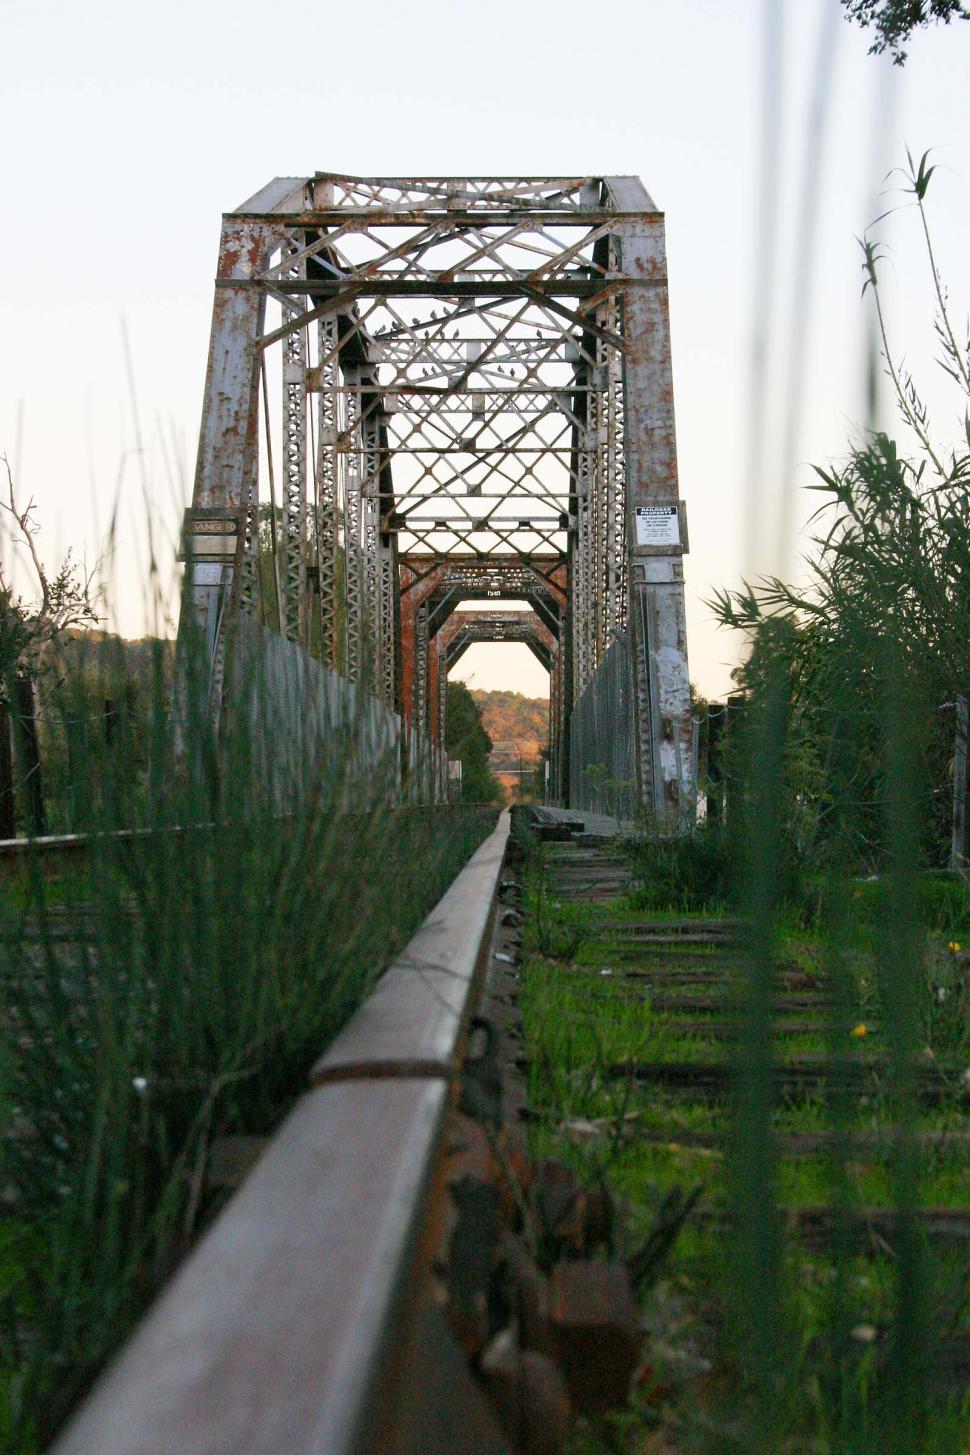 Free Image of Train Bridge Crossing Over Grass 